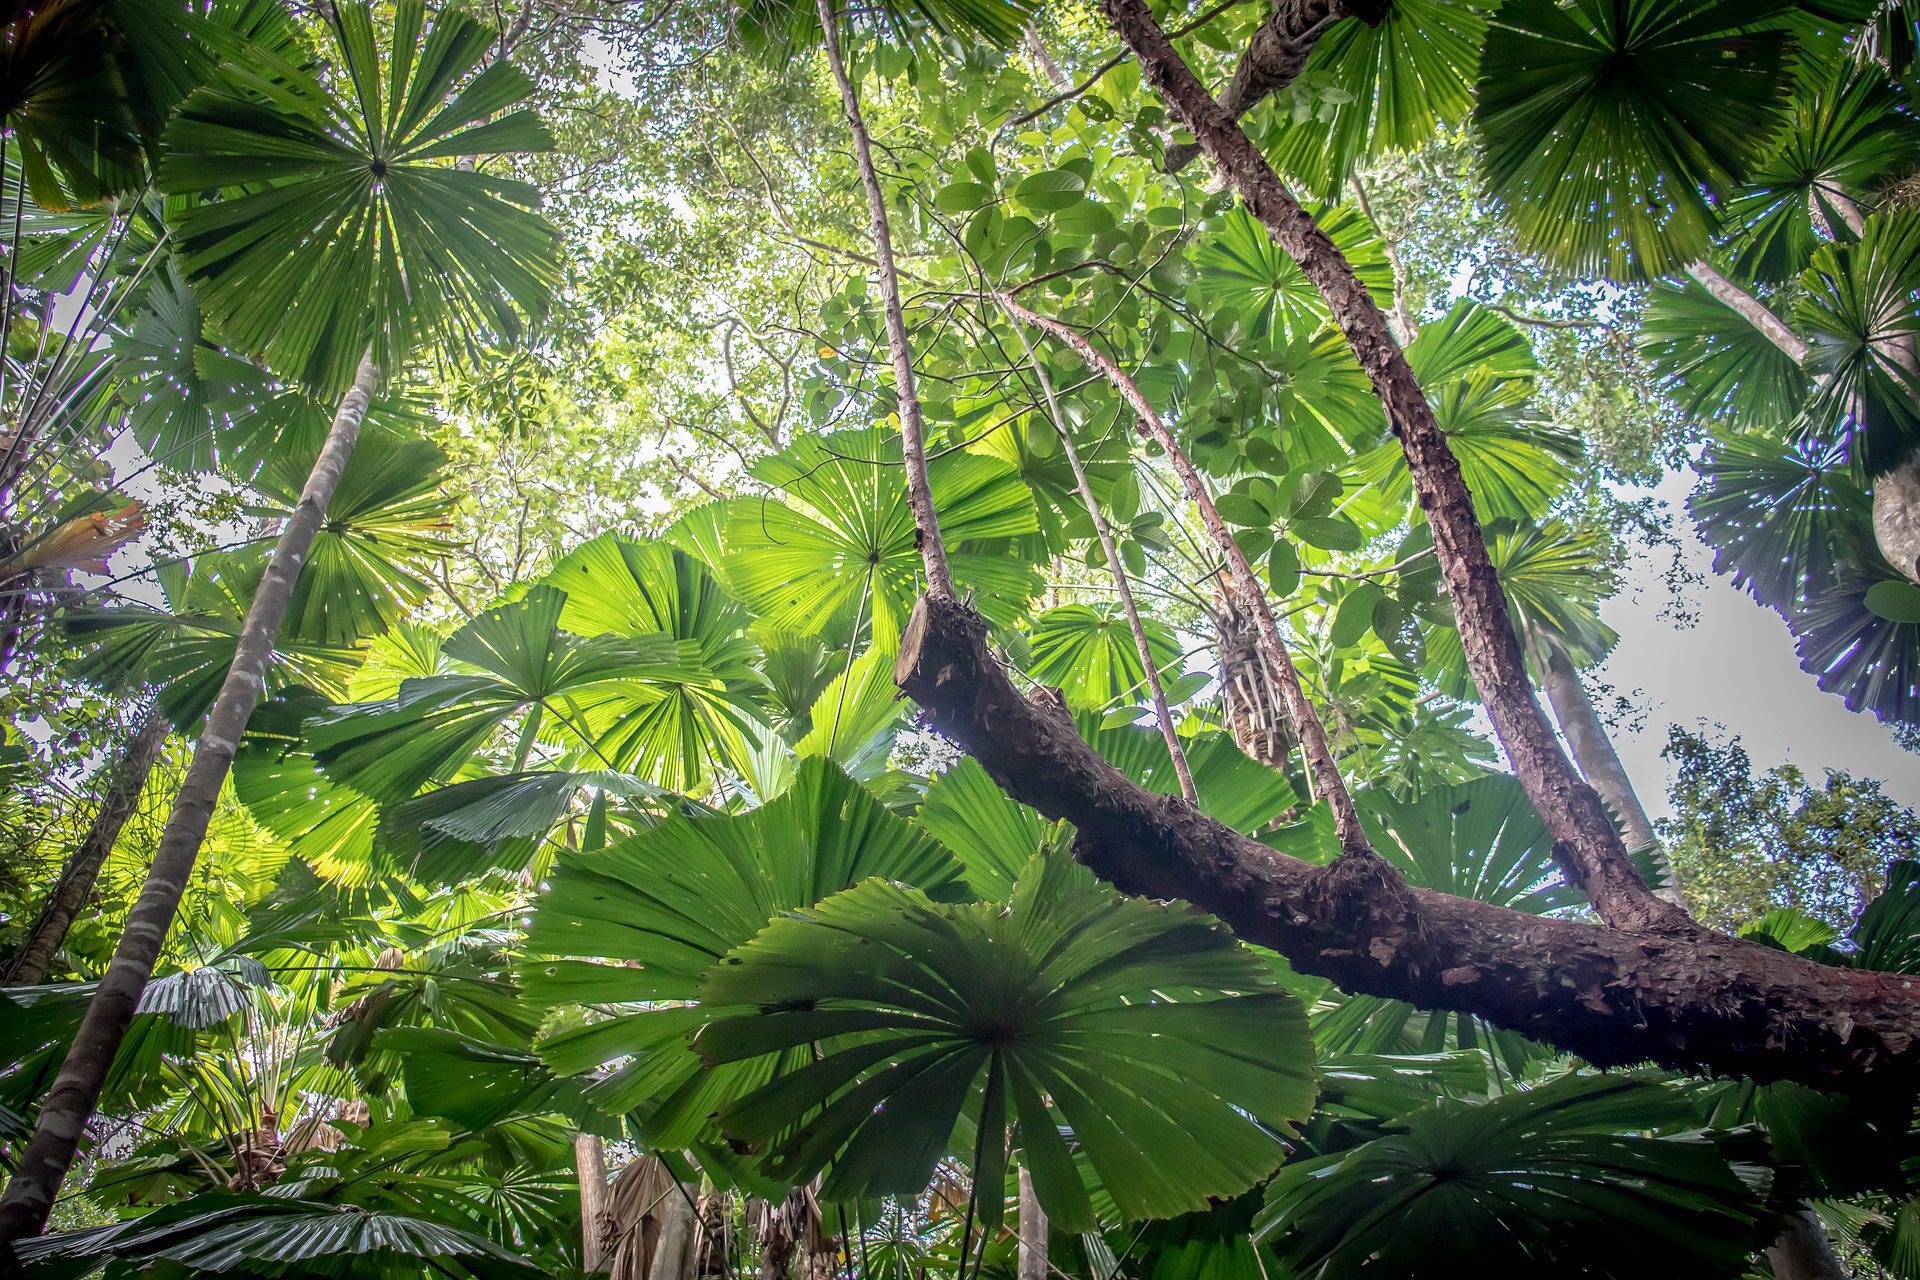 Daintree rainforest Queensland, ideas for a bucket list Adri Marie from Pixabay